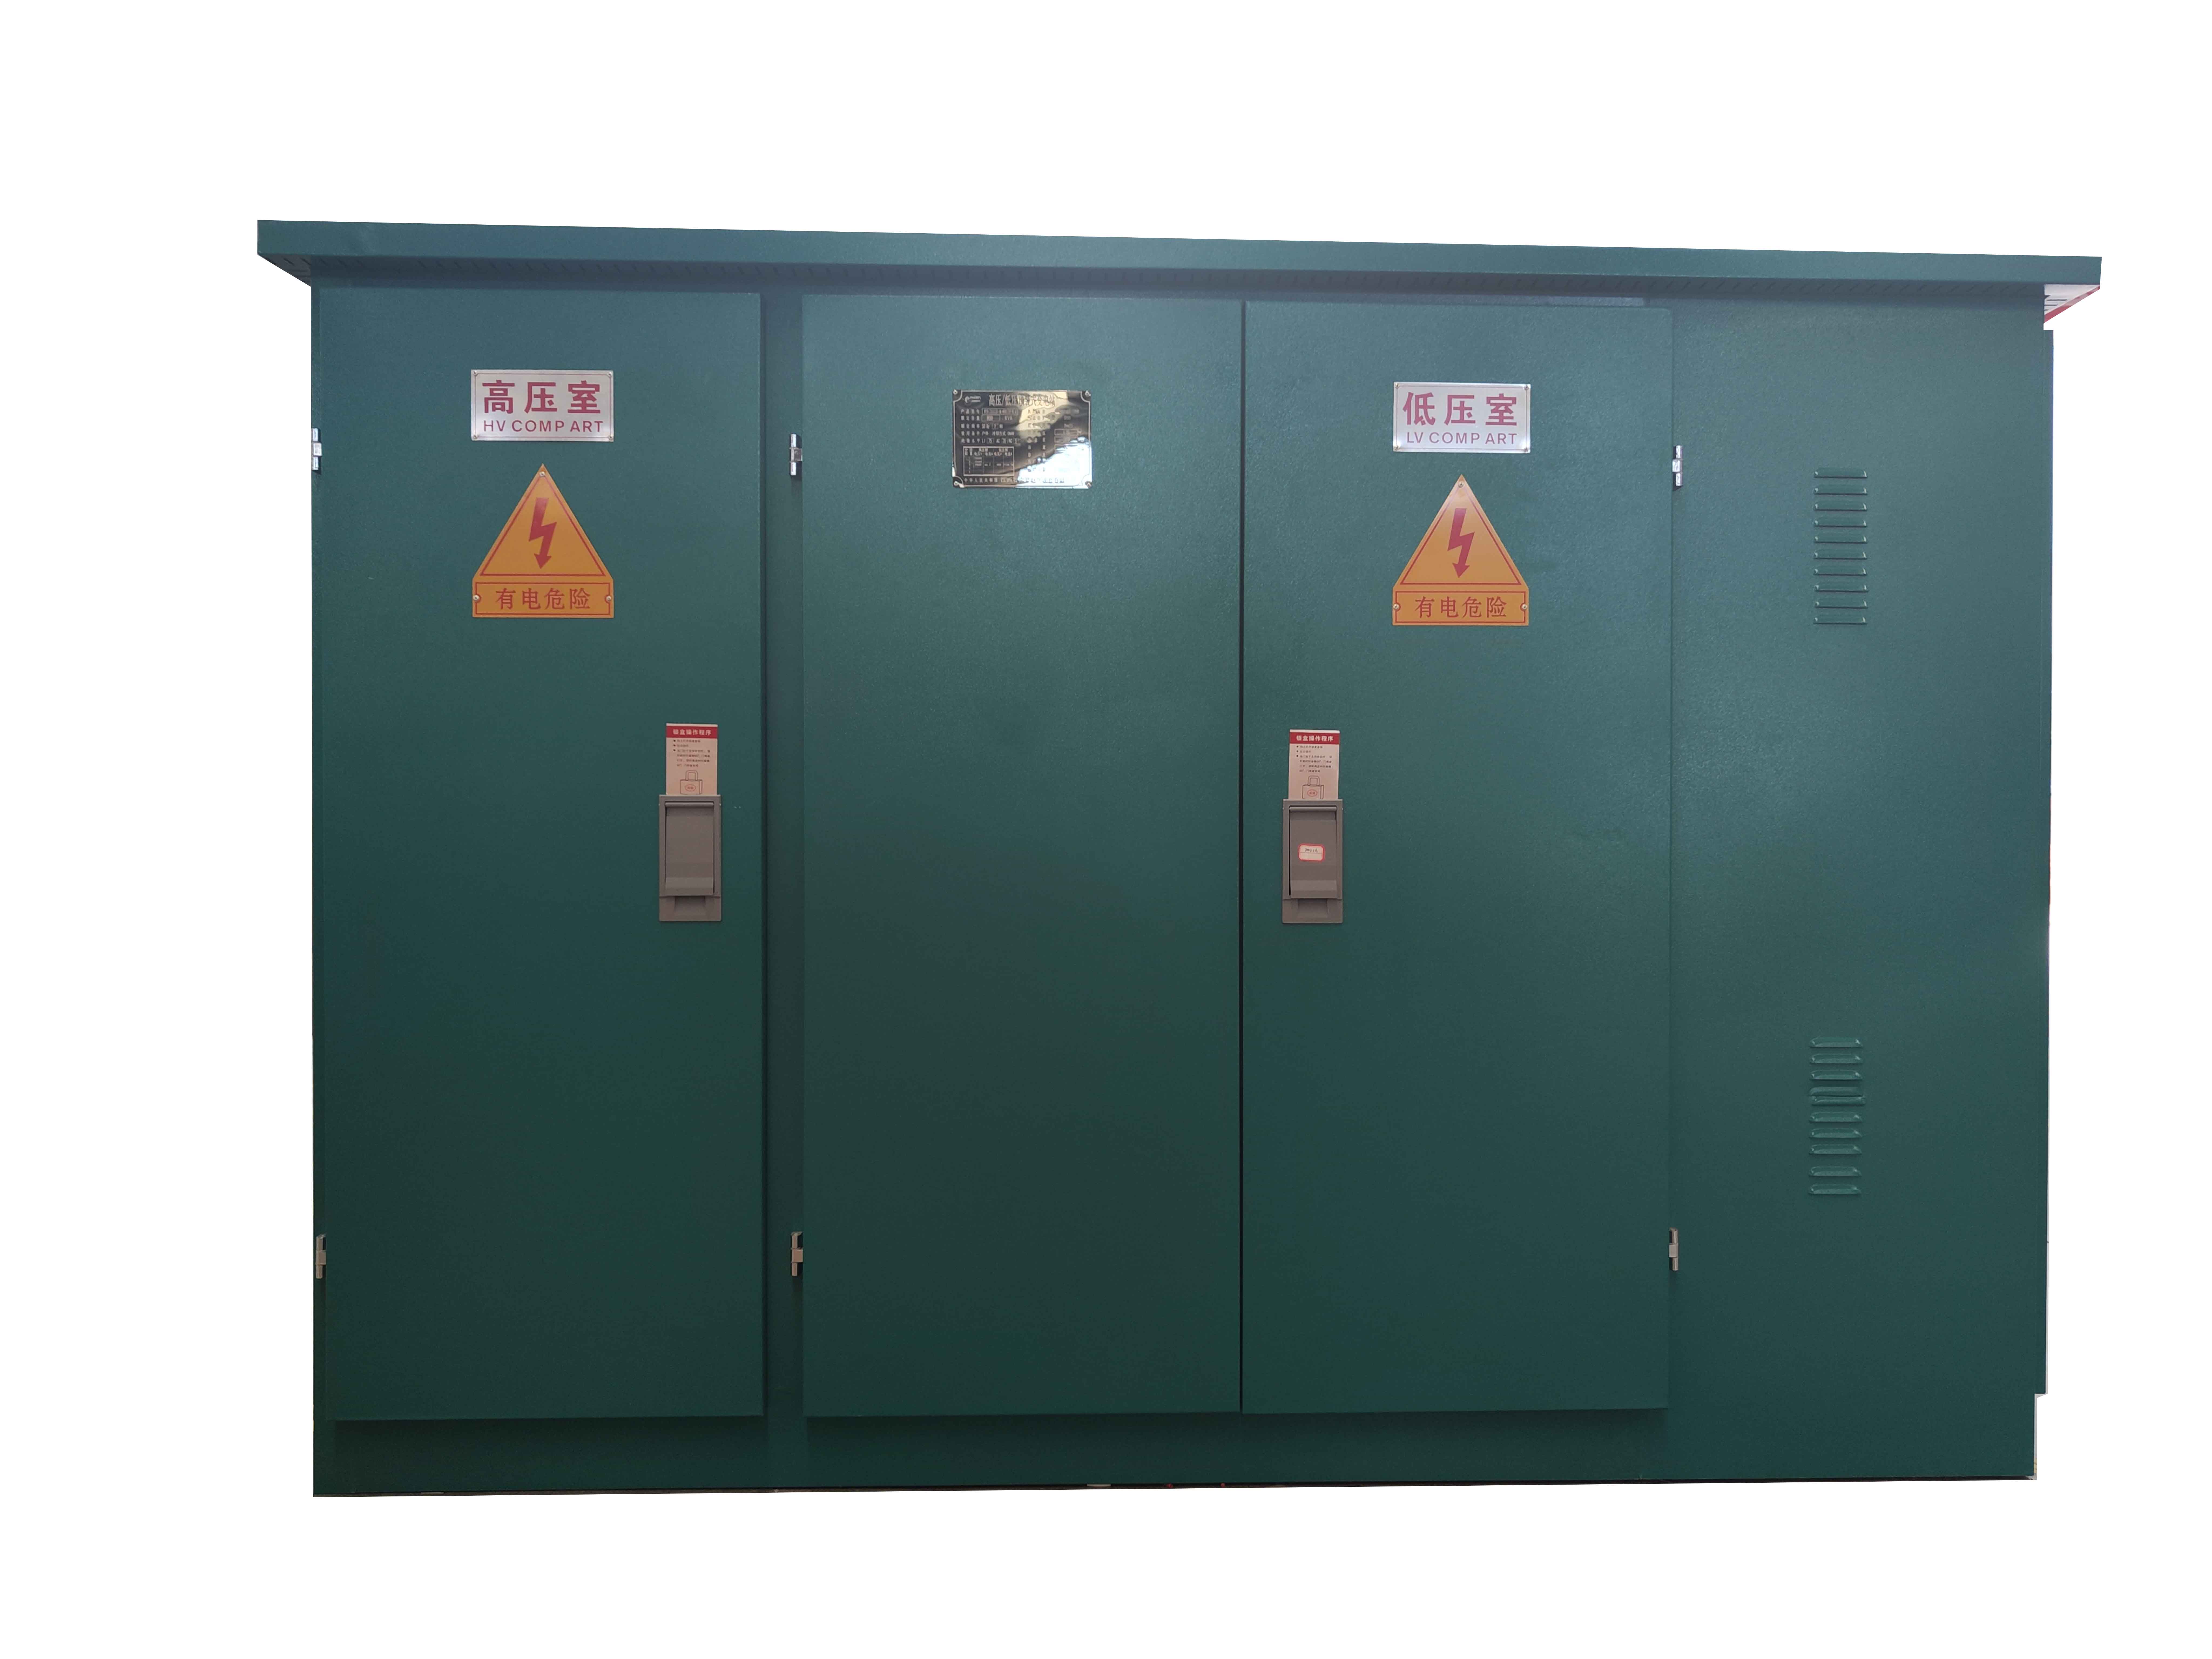 YBM4-120.4高低压预装箱式变电站